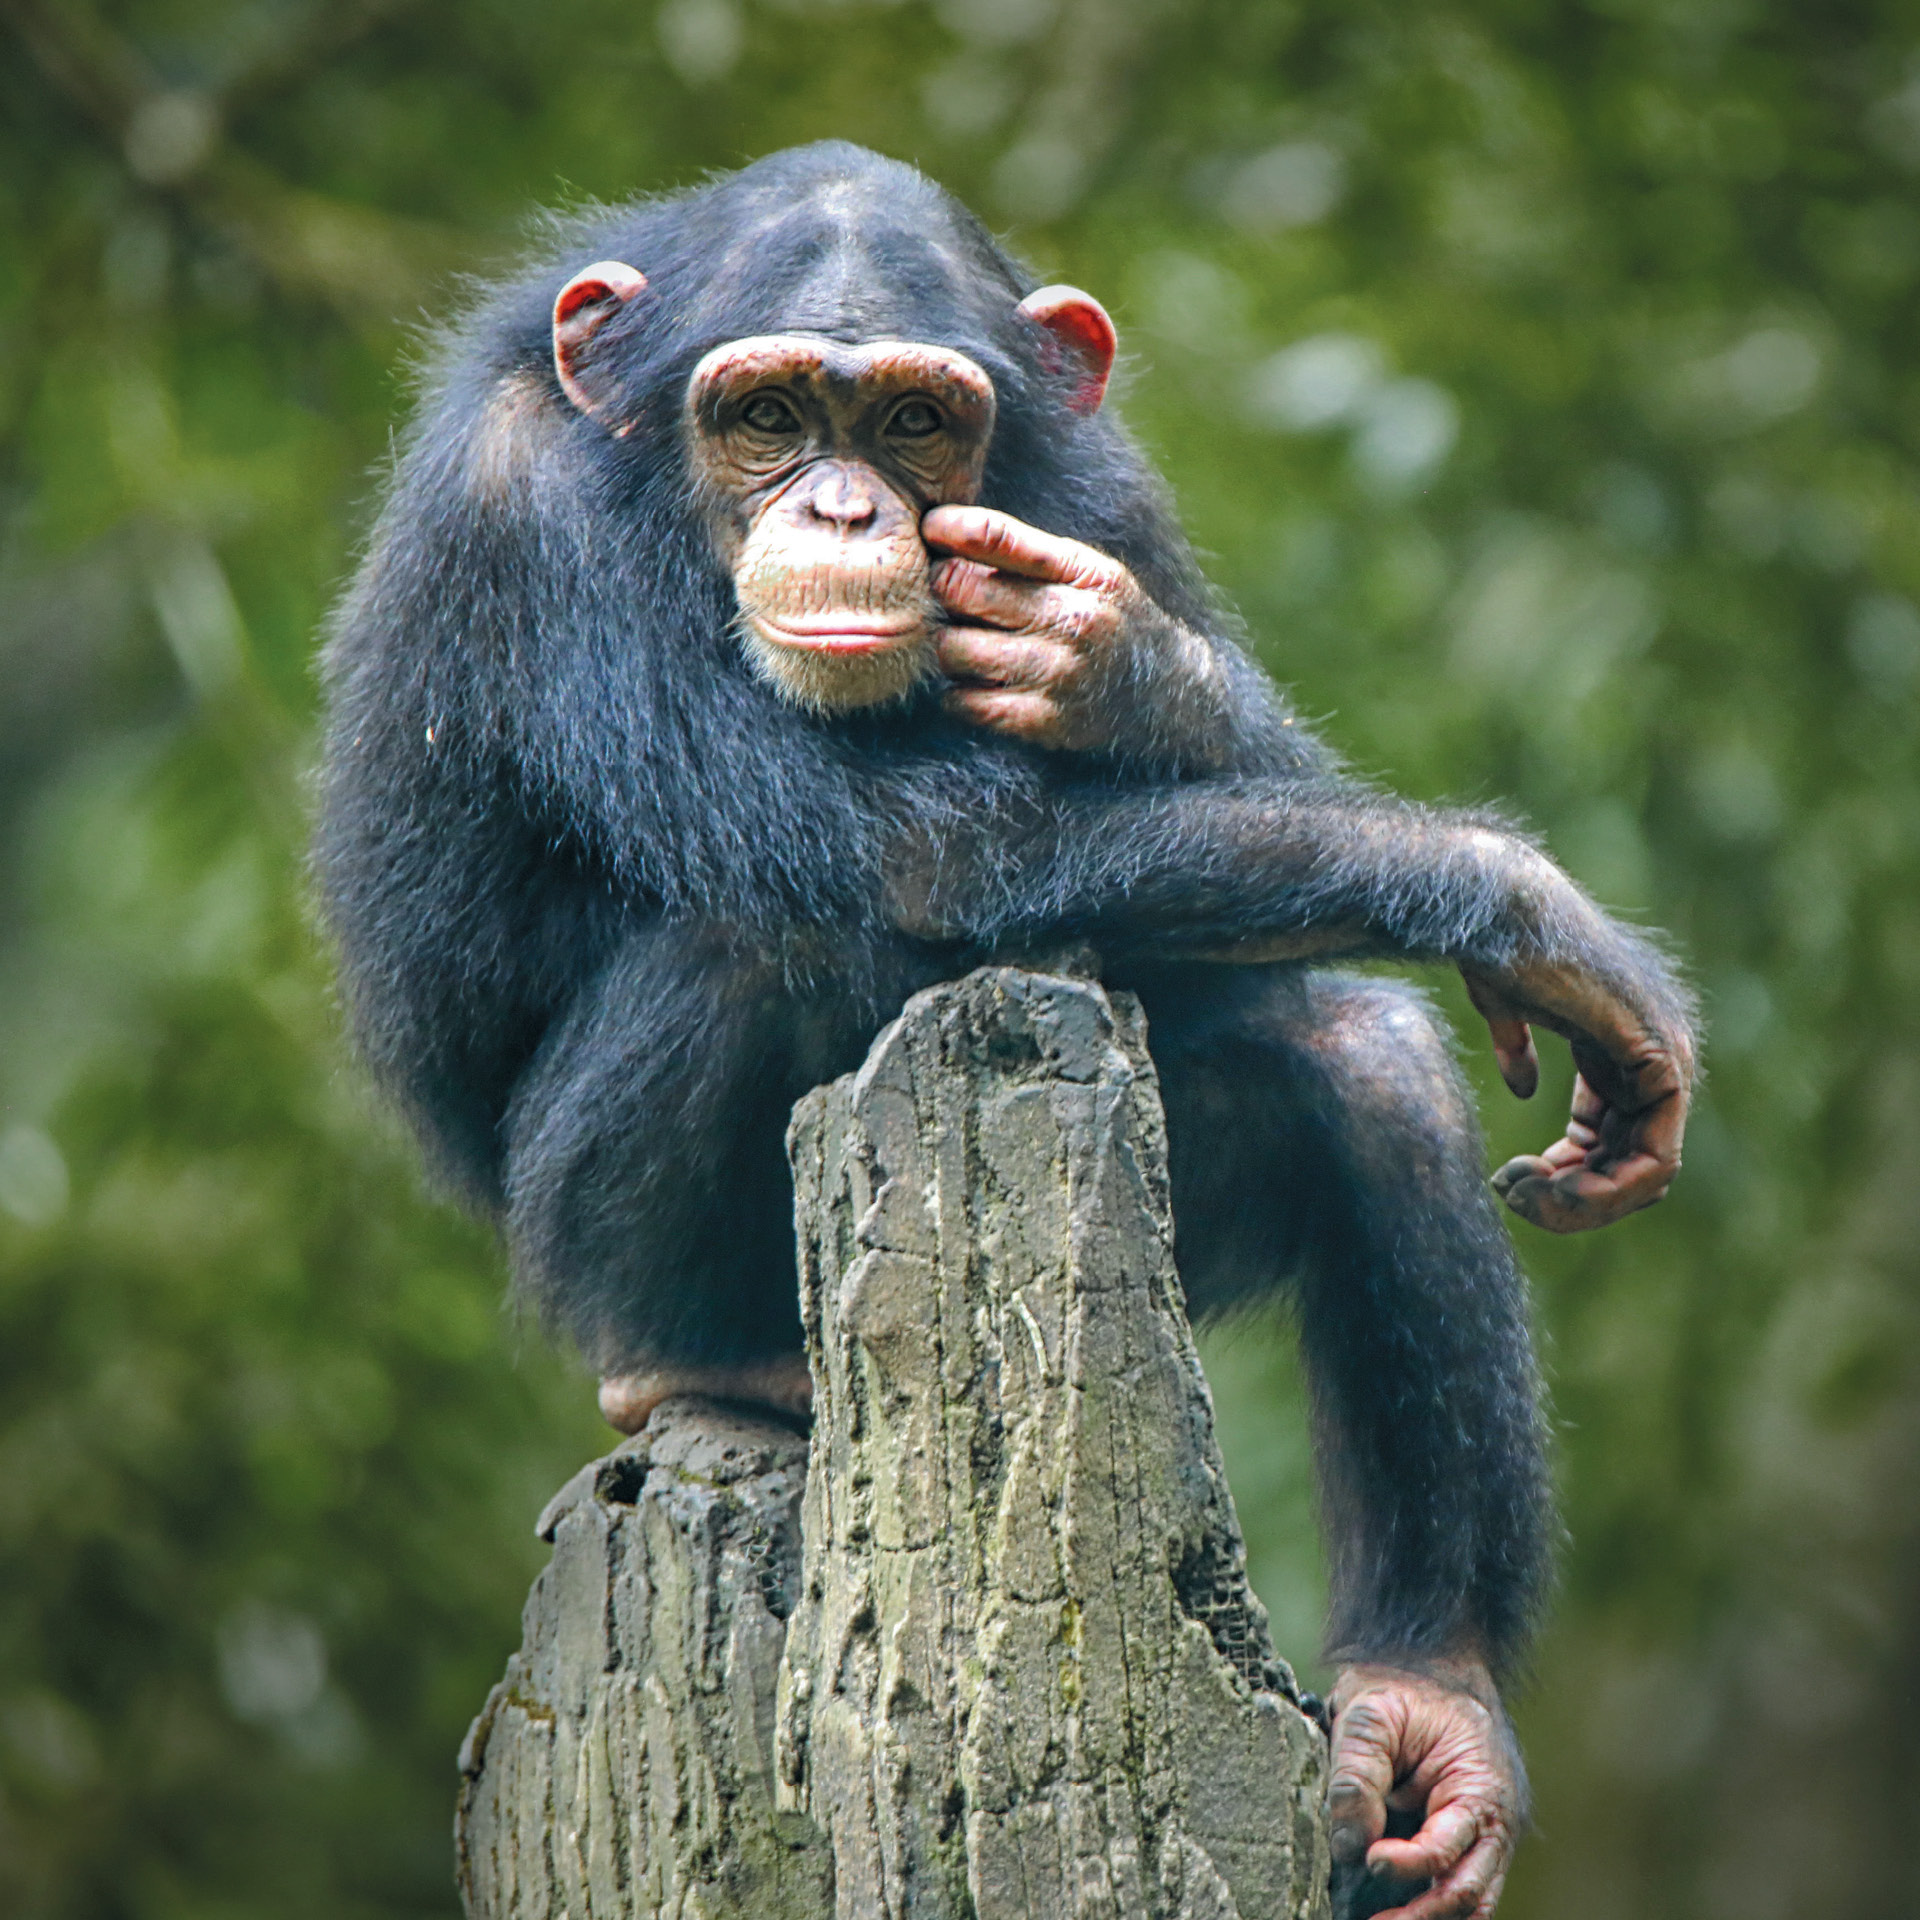 Monkey posing on a log